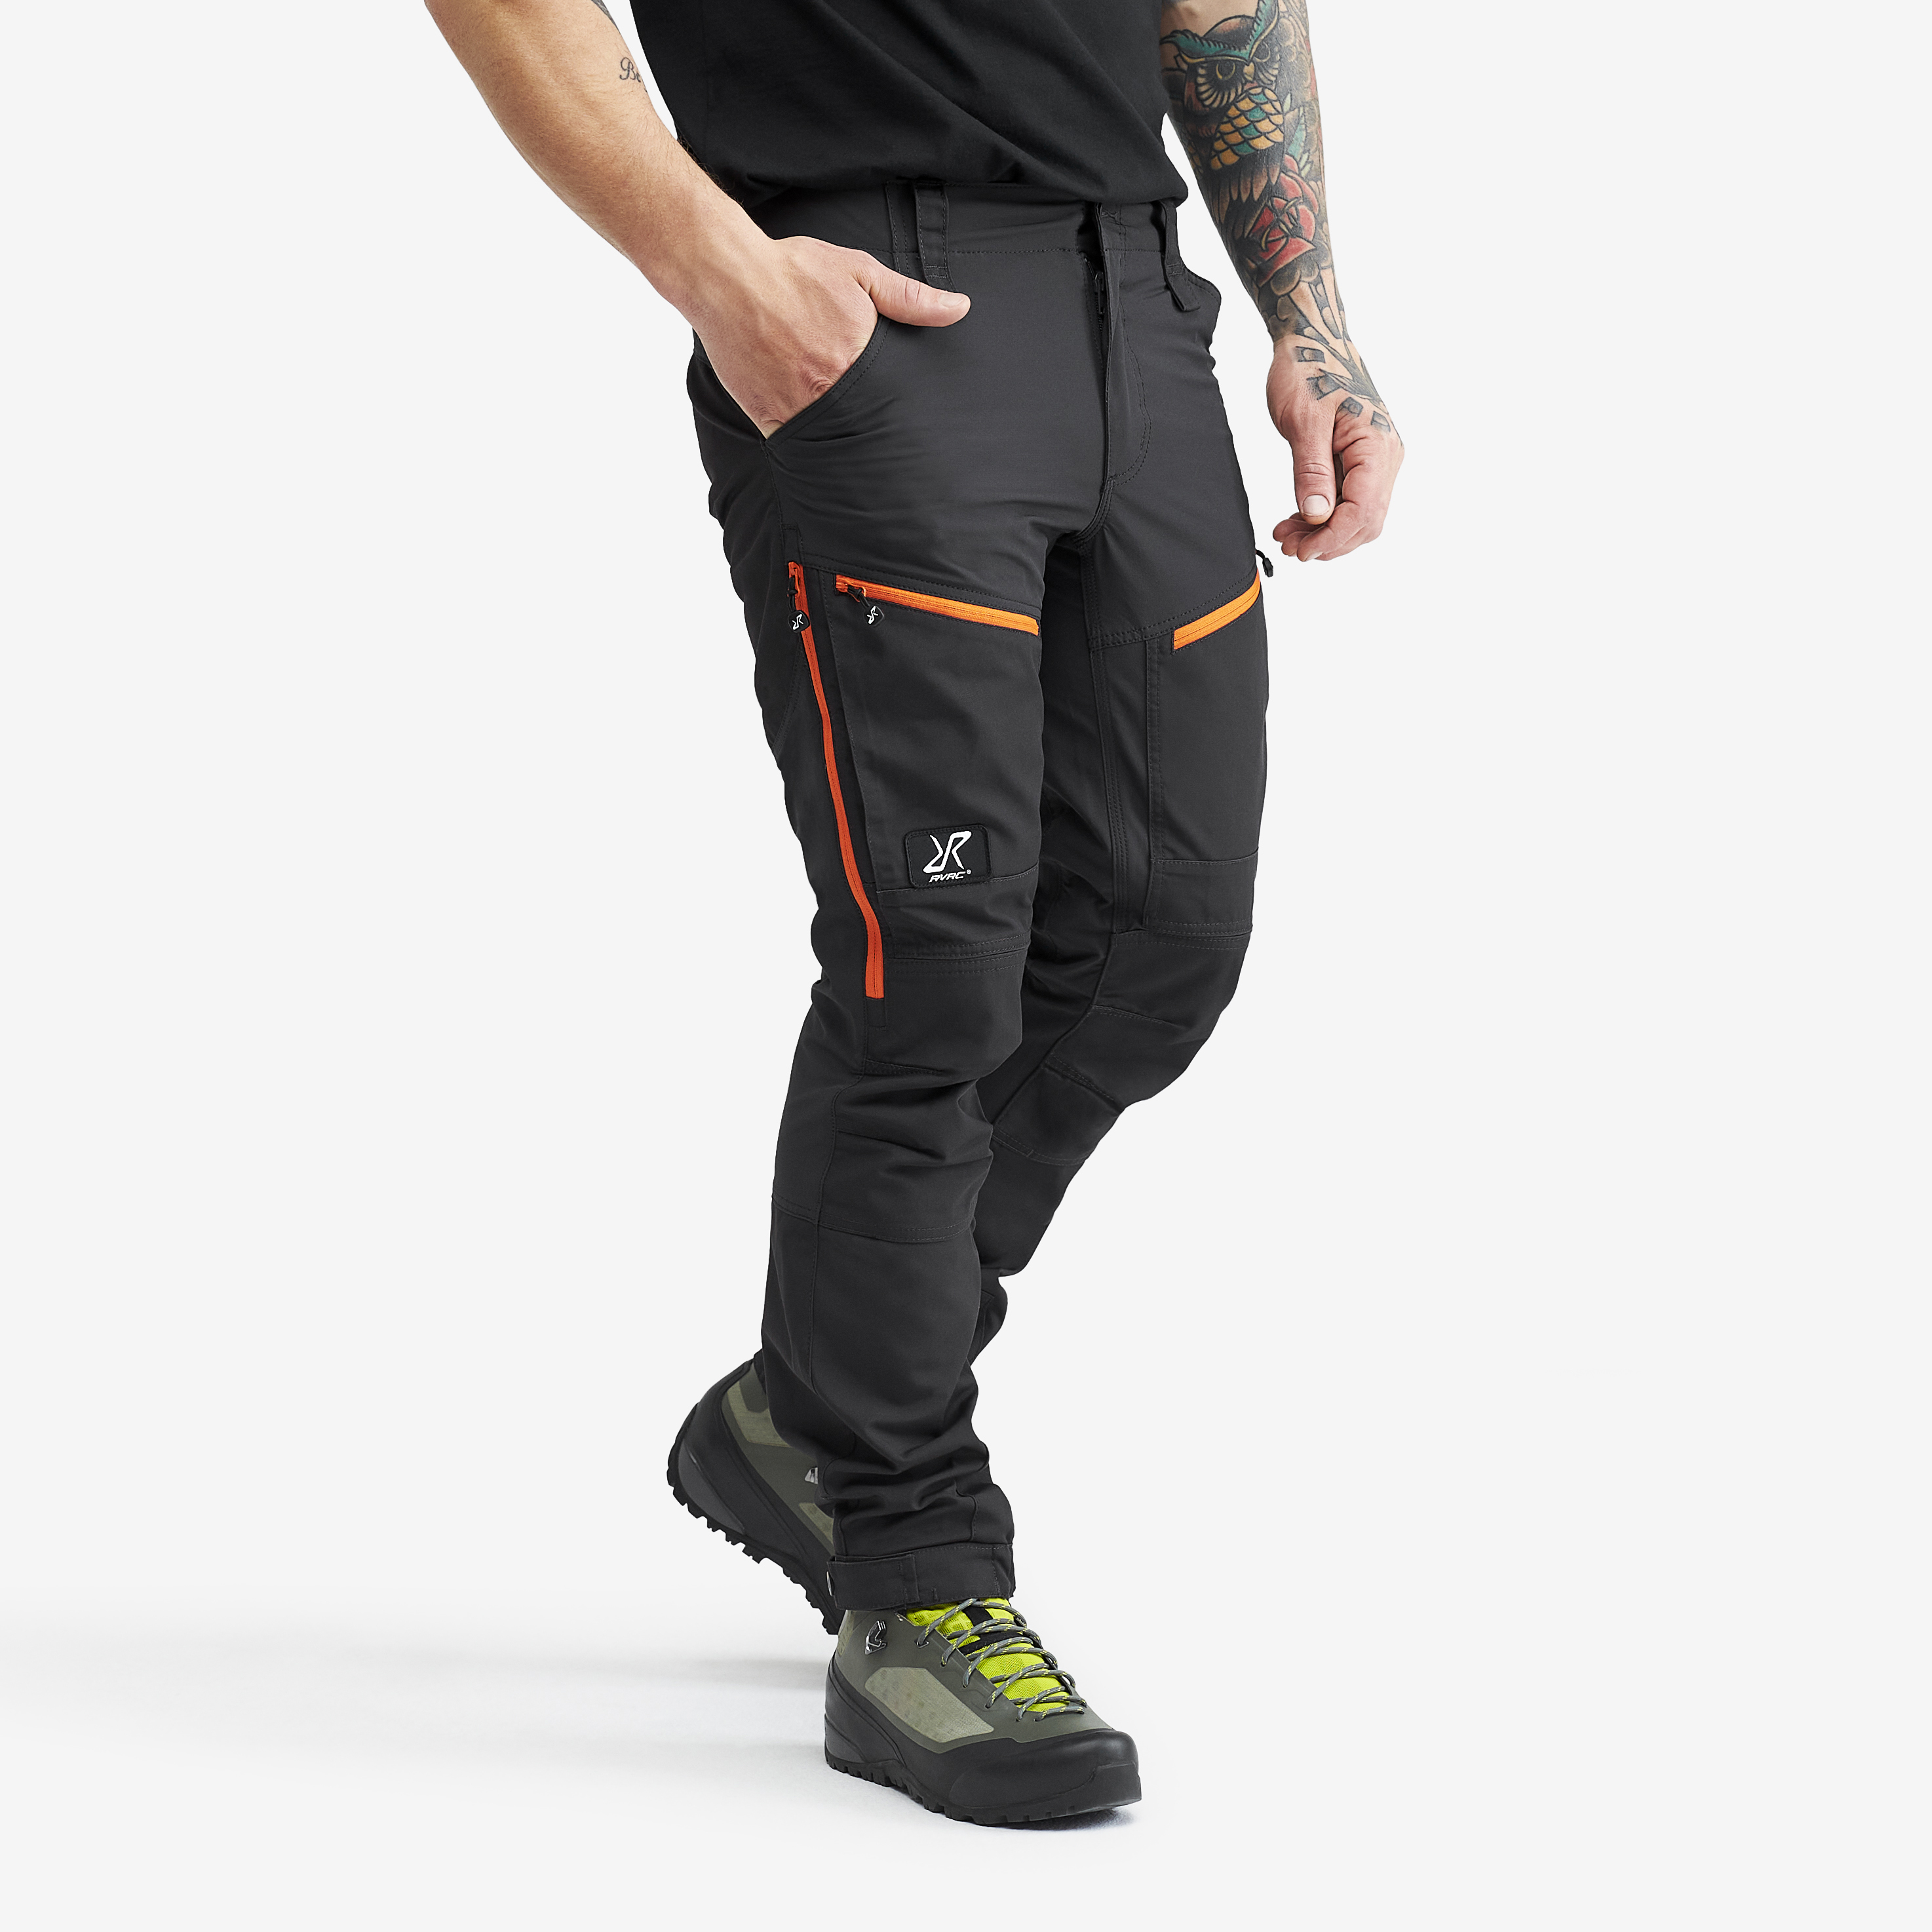 RVRC GP Pro Short Pants Grey/Orange Men